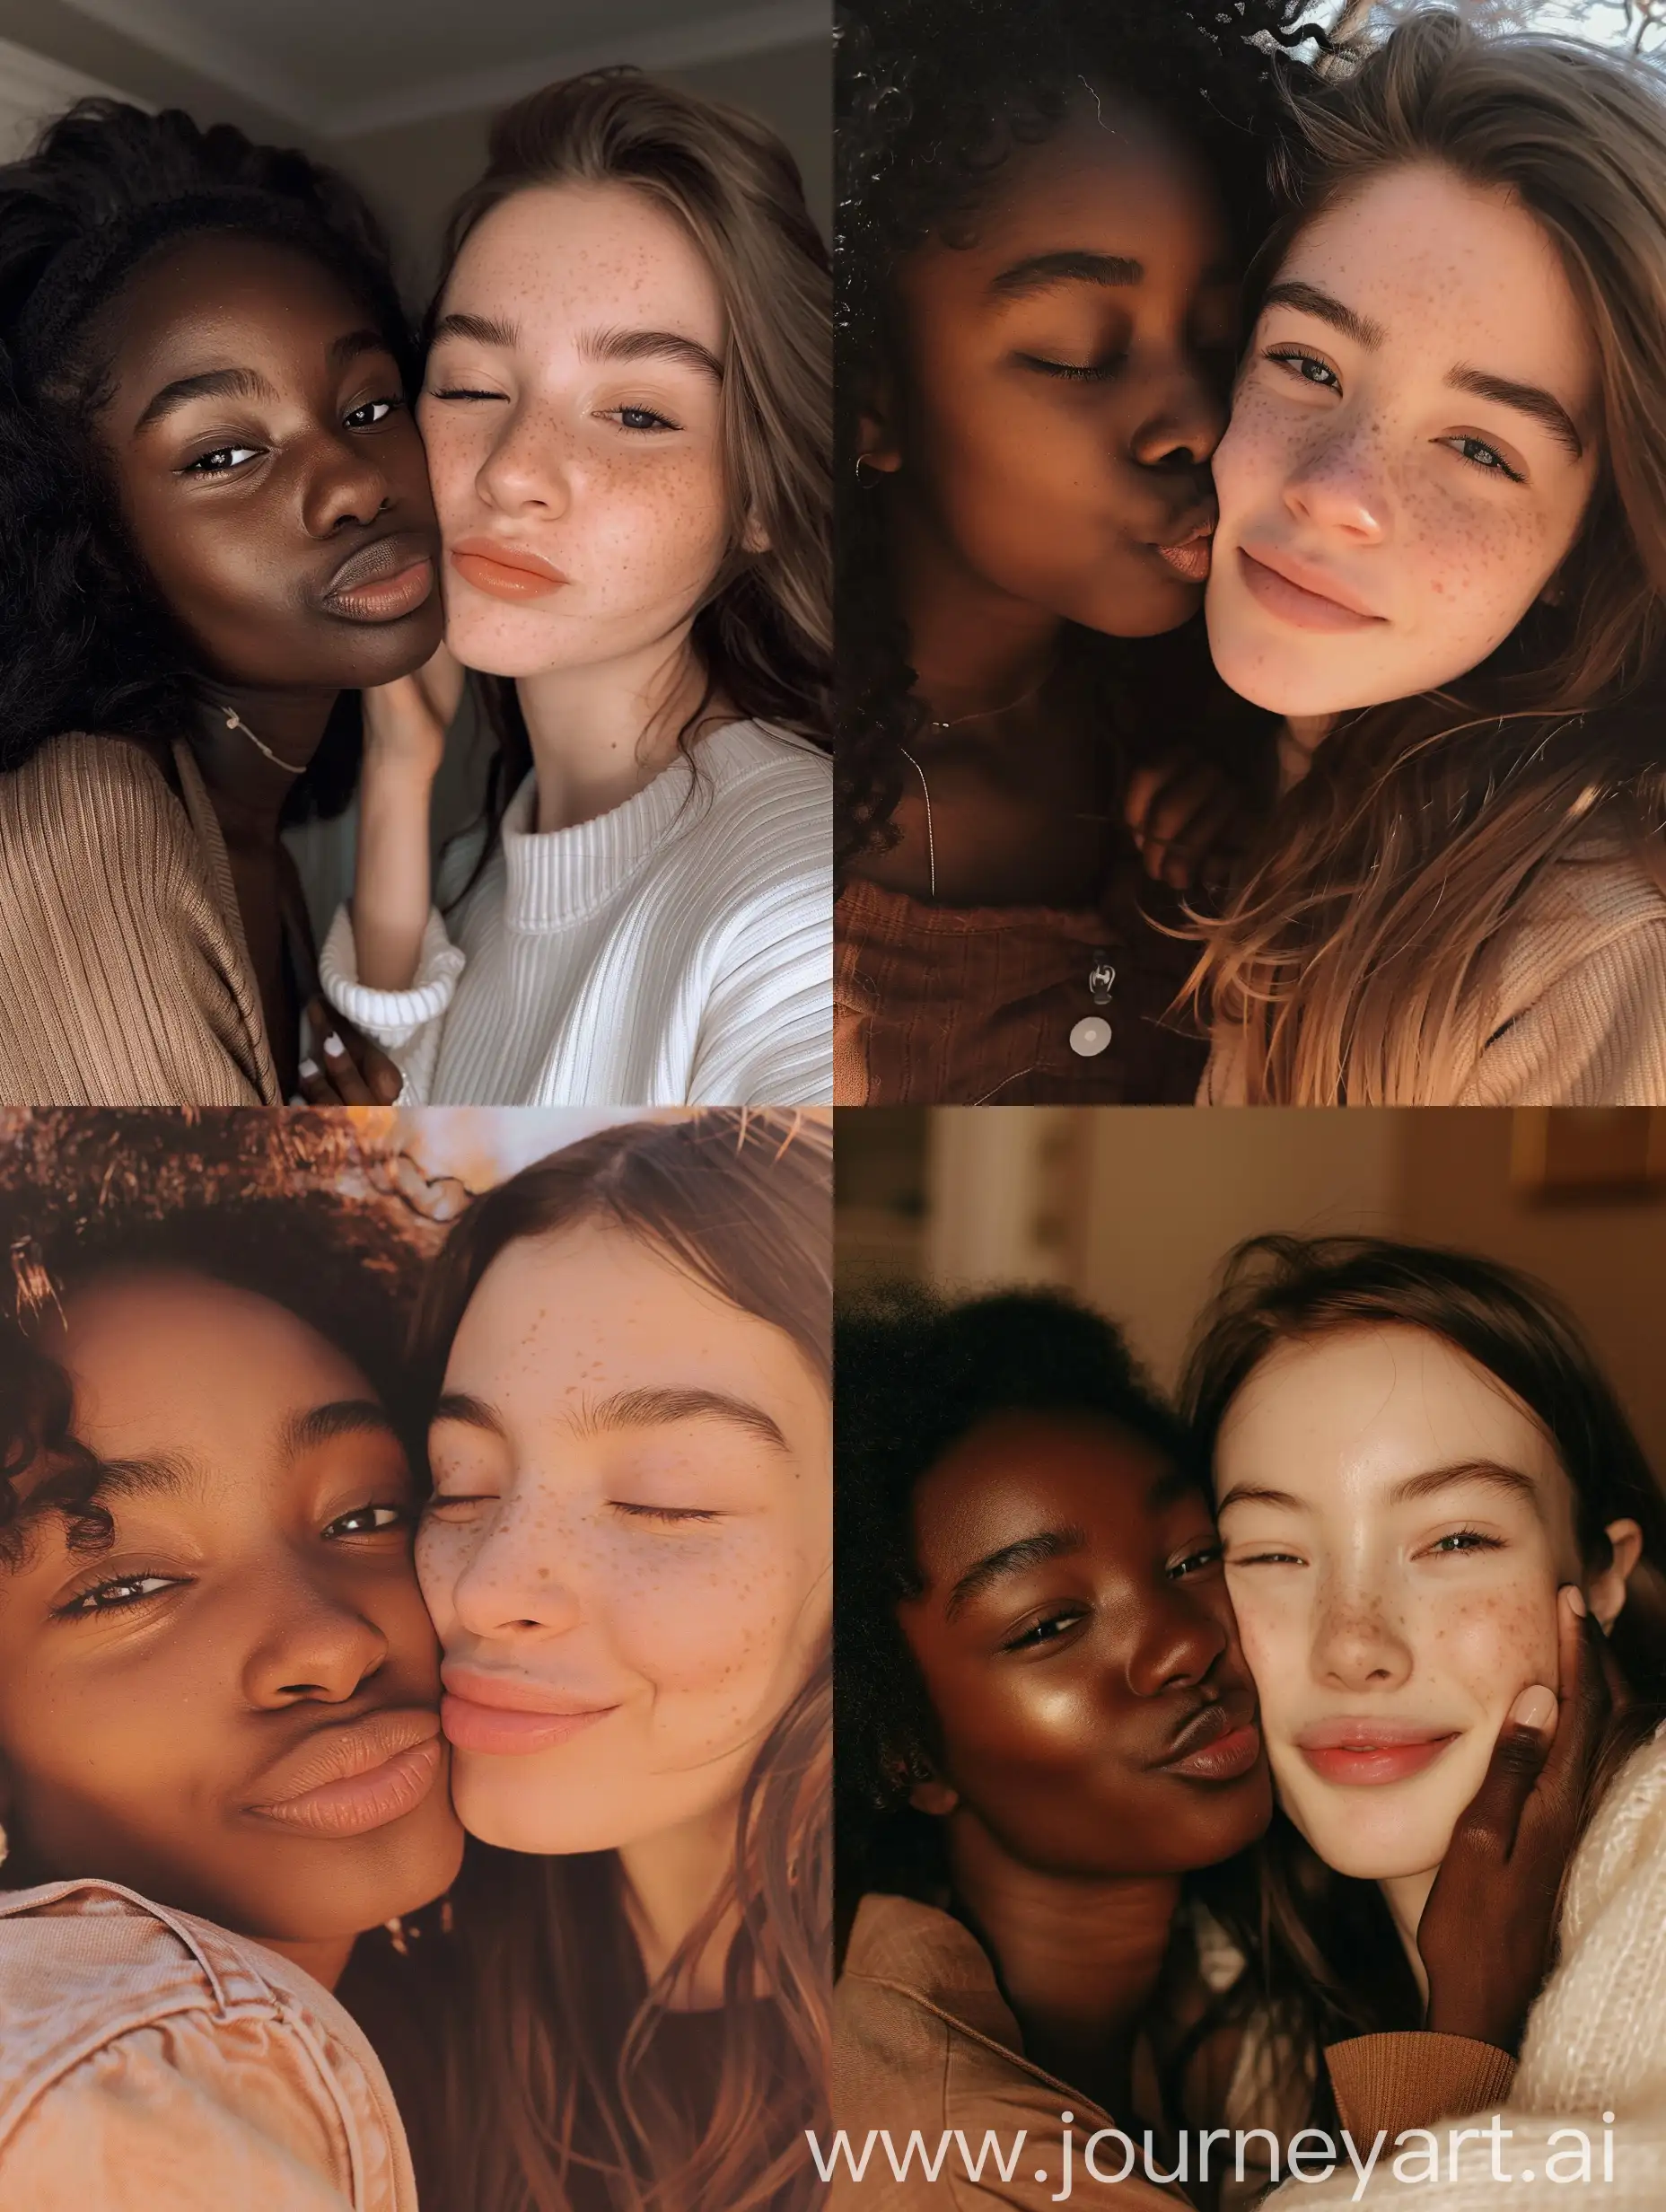 CloseUp-Best-Friends-Selfie-Adorable-Kiss-on-Cheek-in-Warm-Brown-Tones